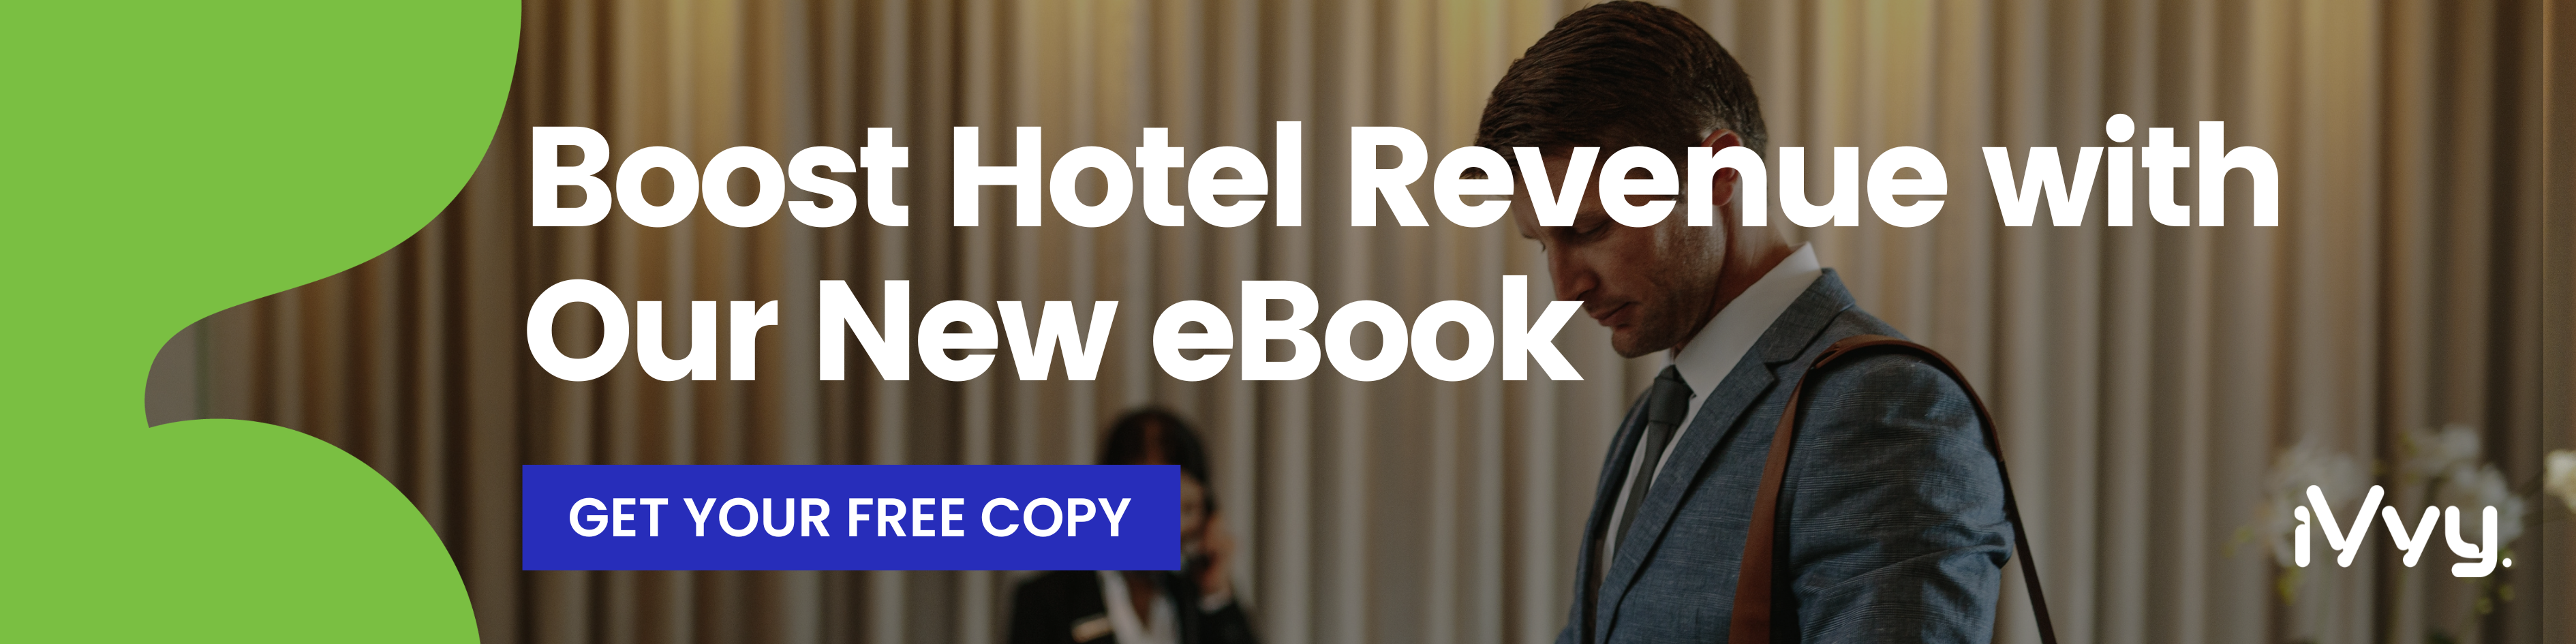 boost hotel revenue free ebook banner